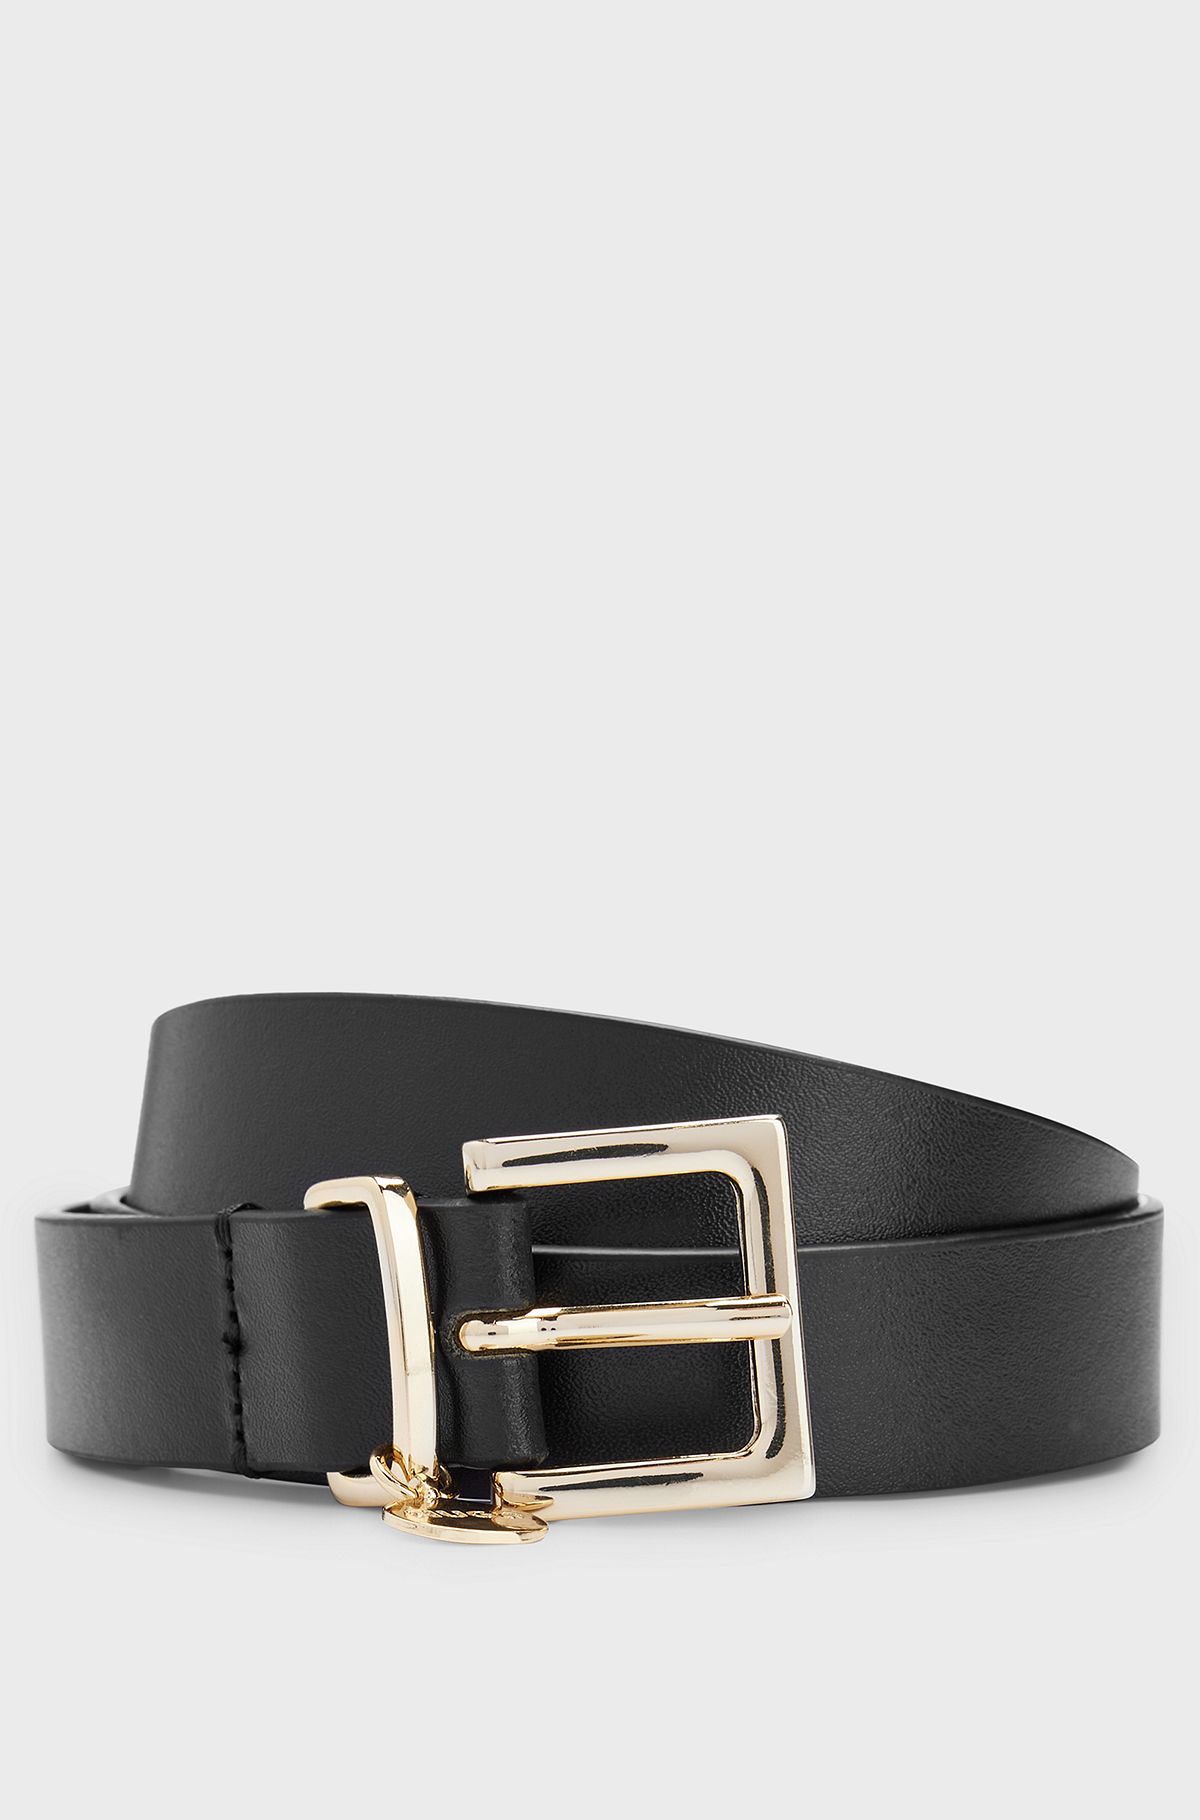 Italian-leather belt with gold-tone logo charm, Black